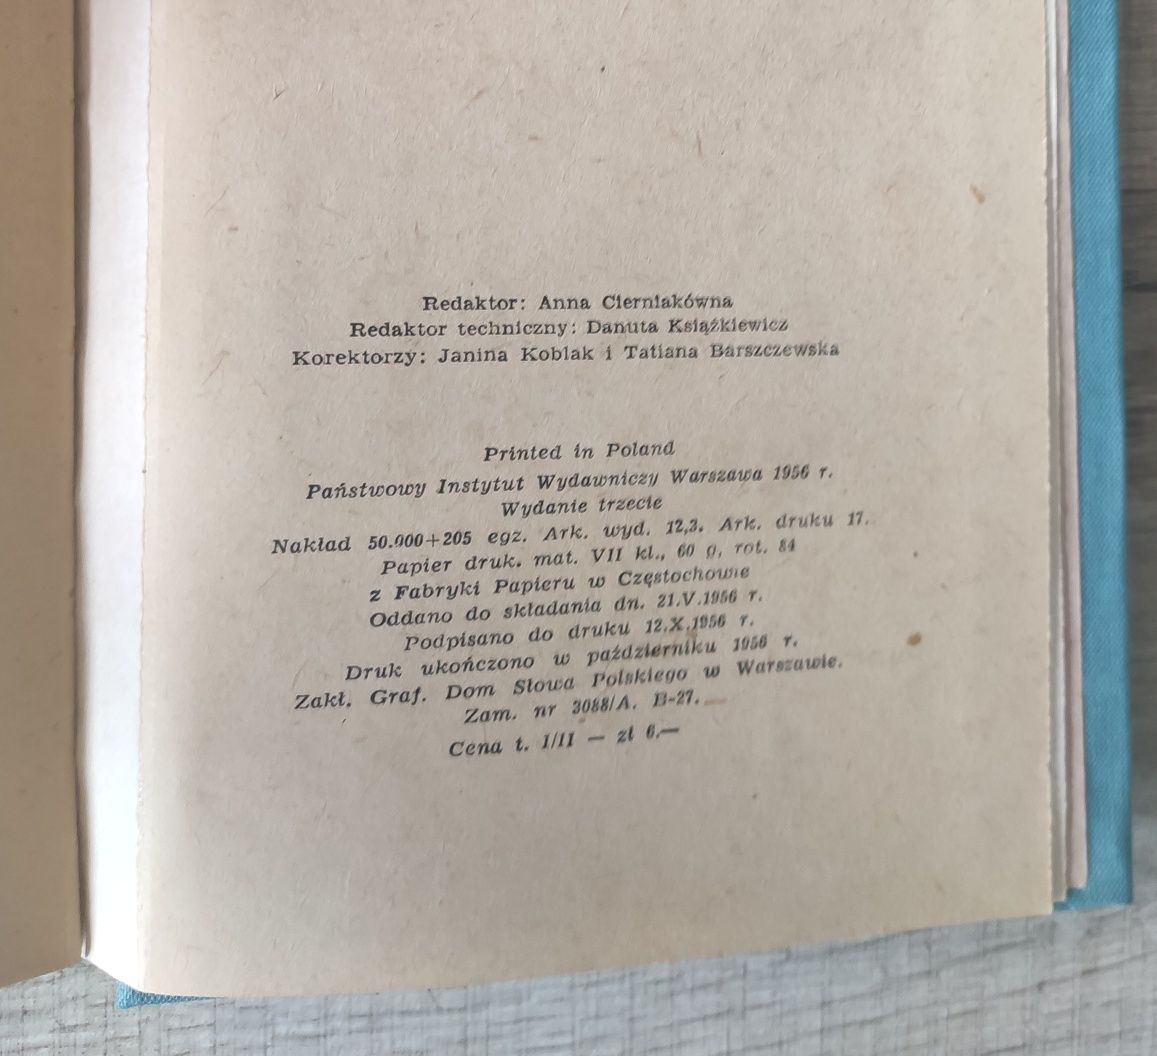 Stendhal Lamiel i Pustynia Parmeńska 1951,II tomy